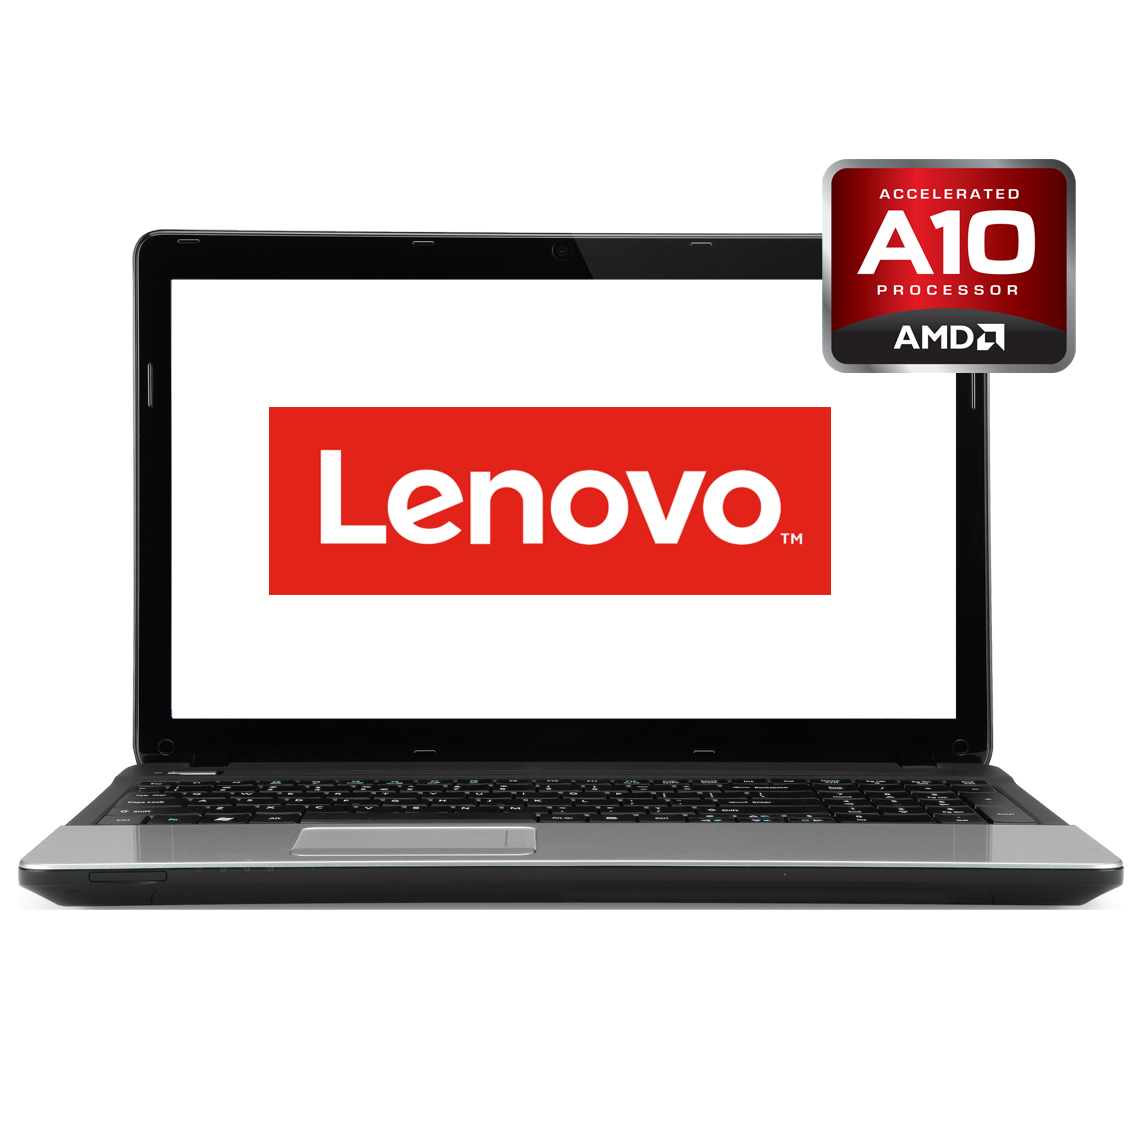 Lenovo - 16 inch AMD A10